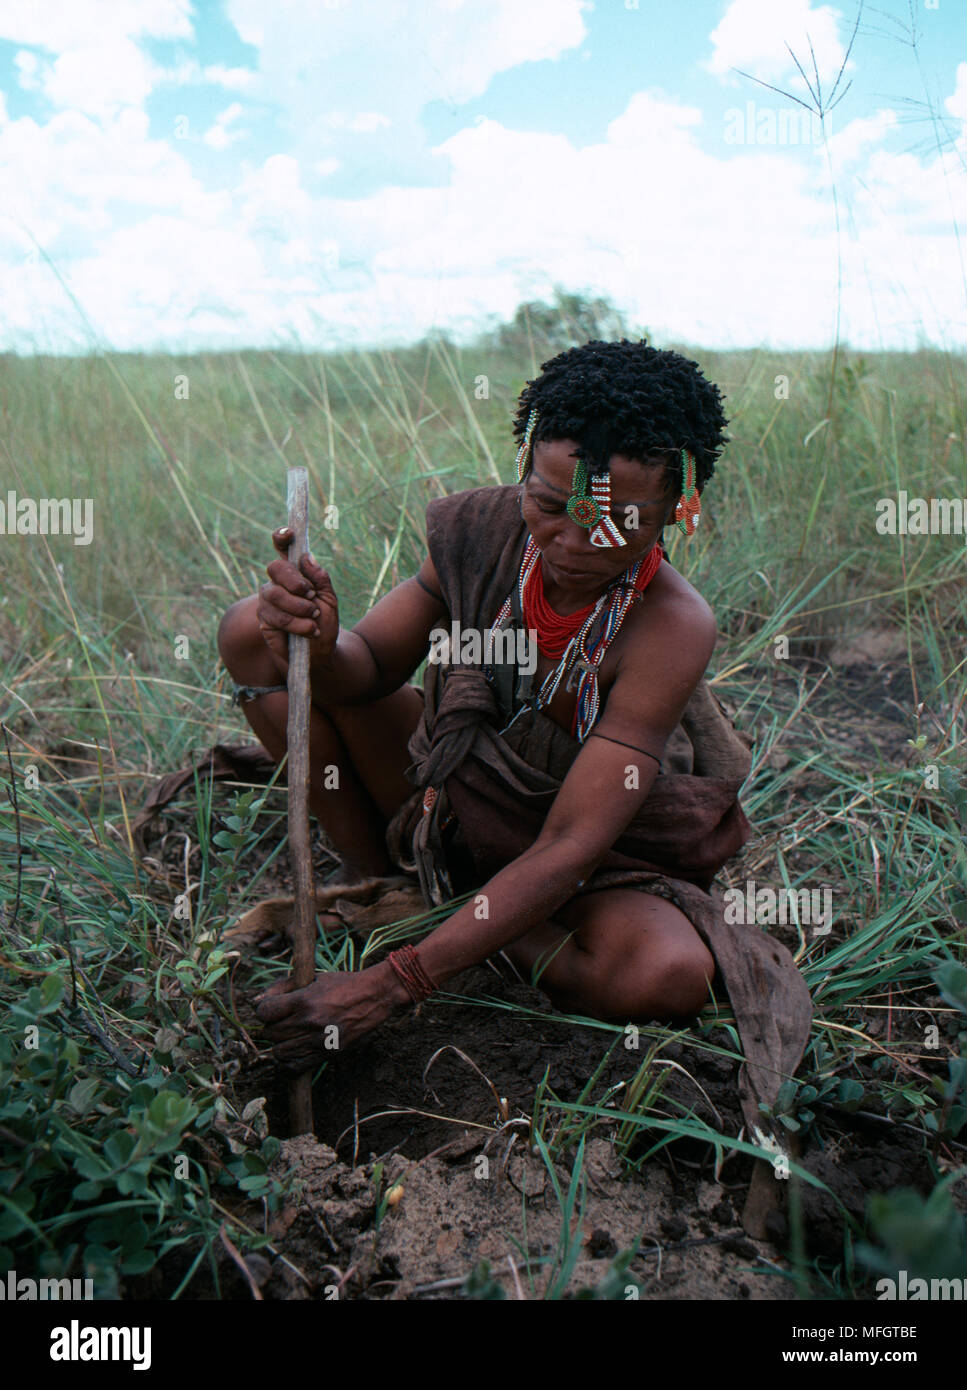 KUNG BUSHMAN WOMAN  digging for roots with stick  Kalahari, southern Africa Stock Photo